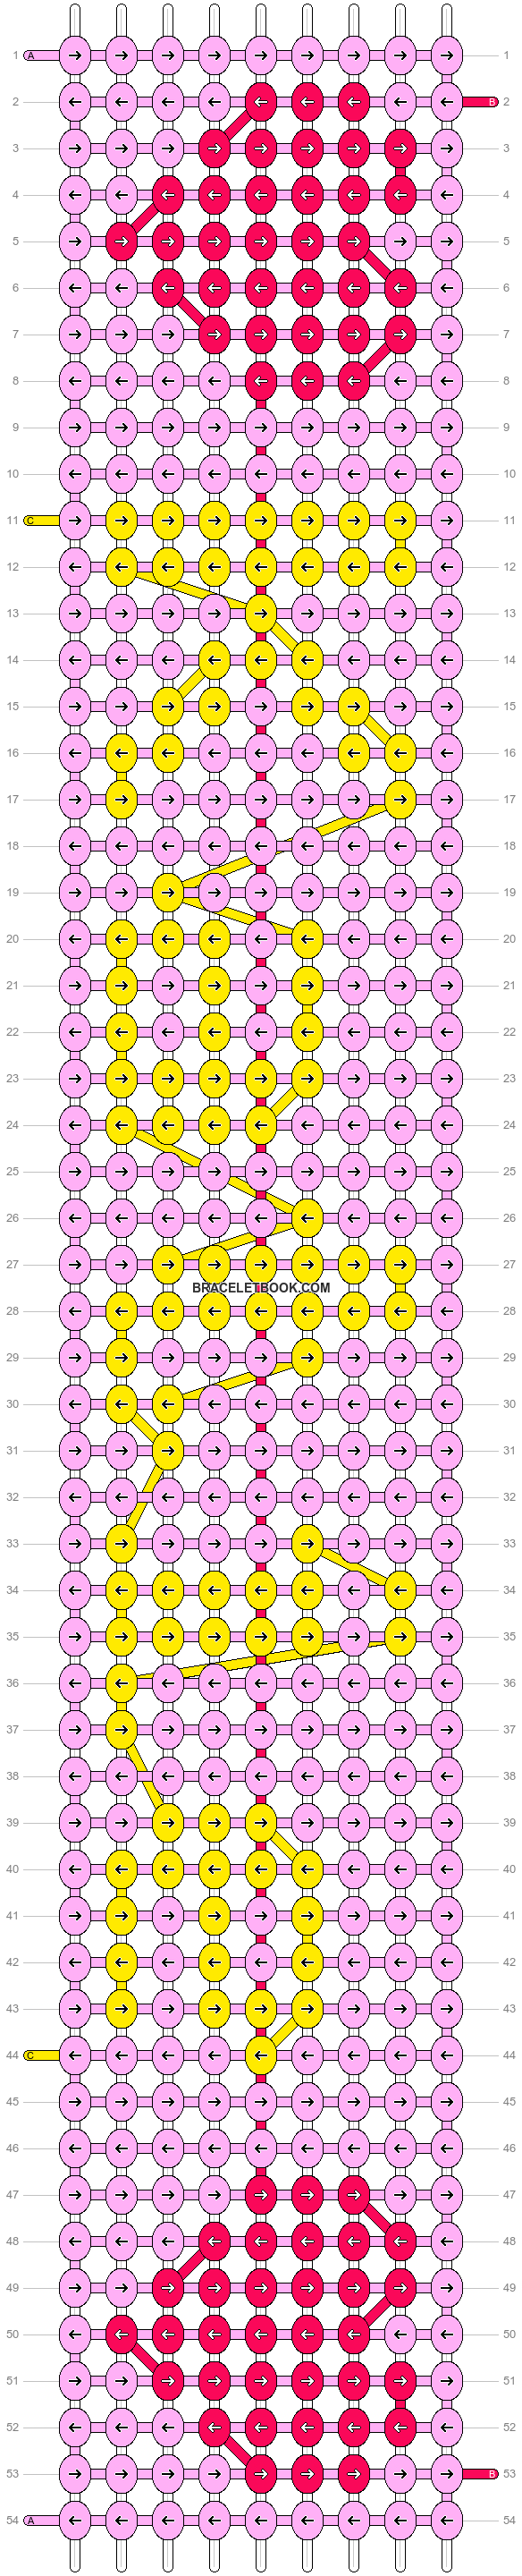 Alpha pattern #6784 variation #197377 pattern